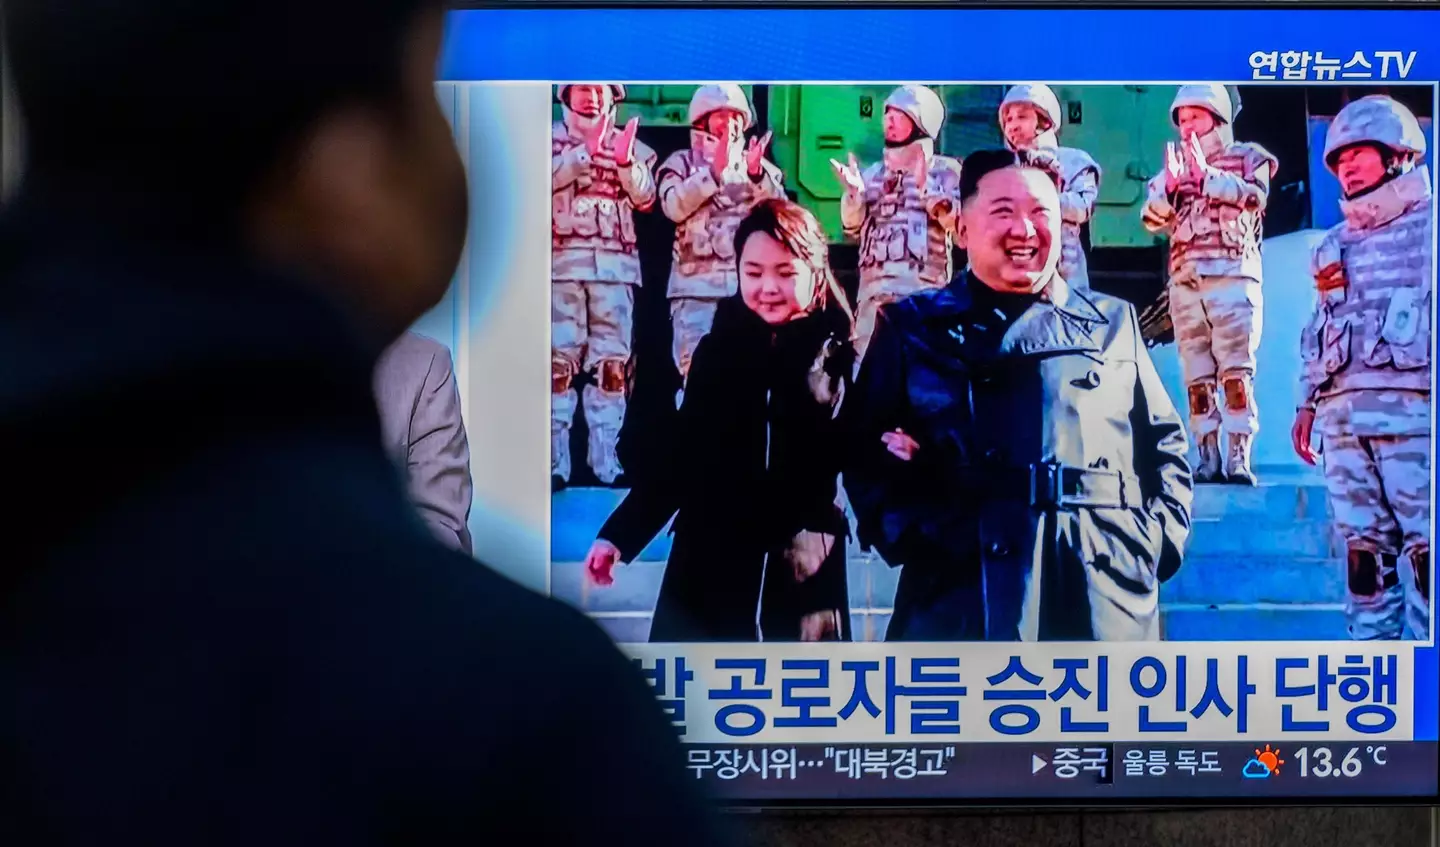 North Korean leader Kim Jong Un and his daughter on KCNA.